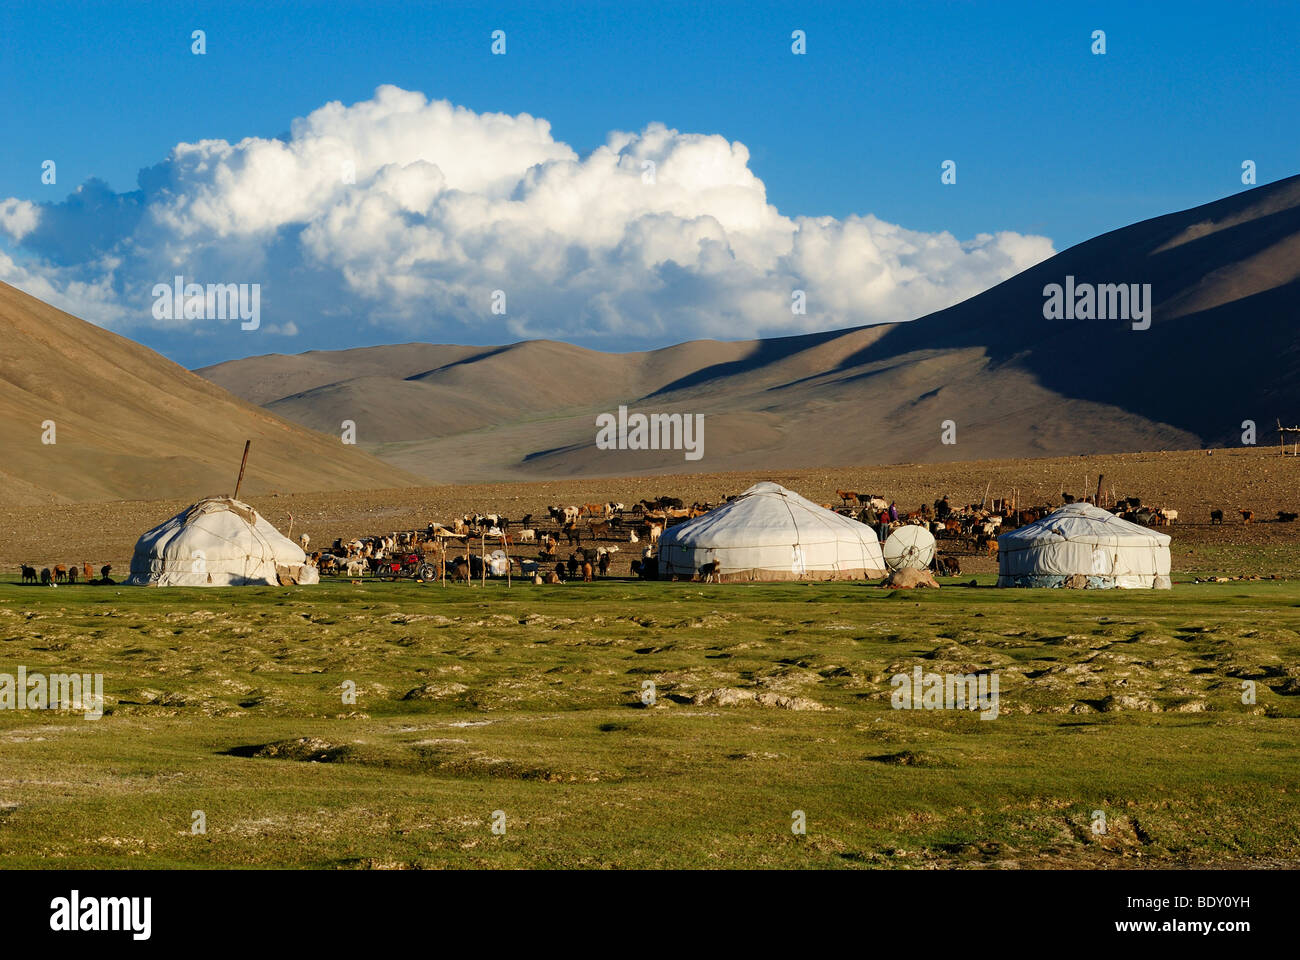 Nomad yurts in the Mongolian steppe, Aimak Bayan Ulgi, Altai Mountains, Mongolia, Asia Stock Photo